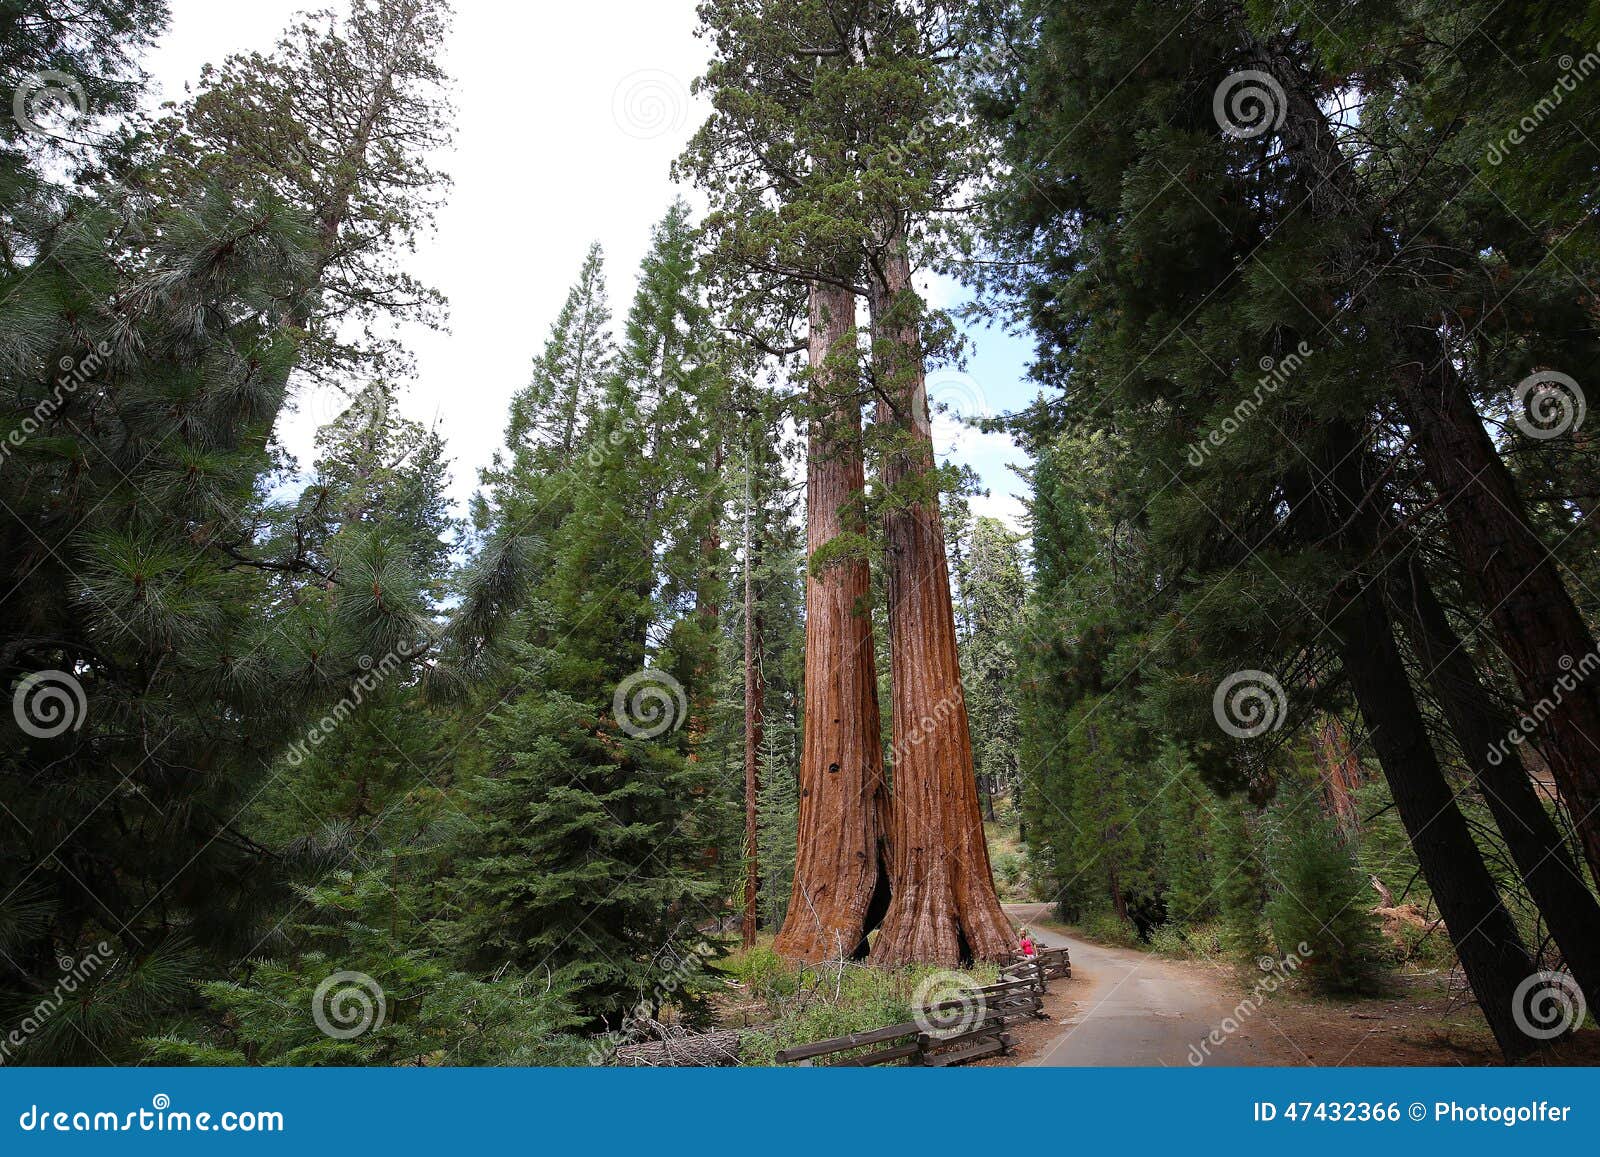 sequoias at mariposa grove, yosemite national park